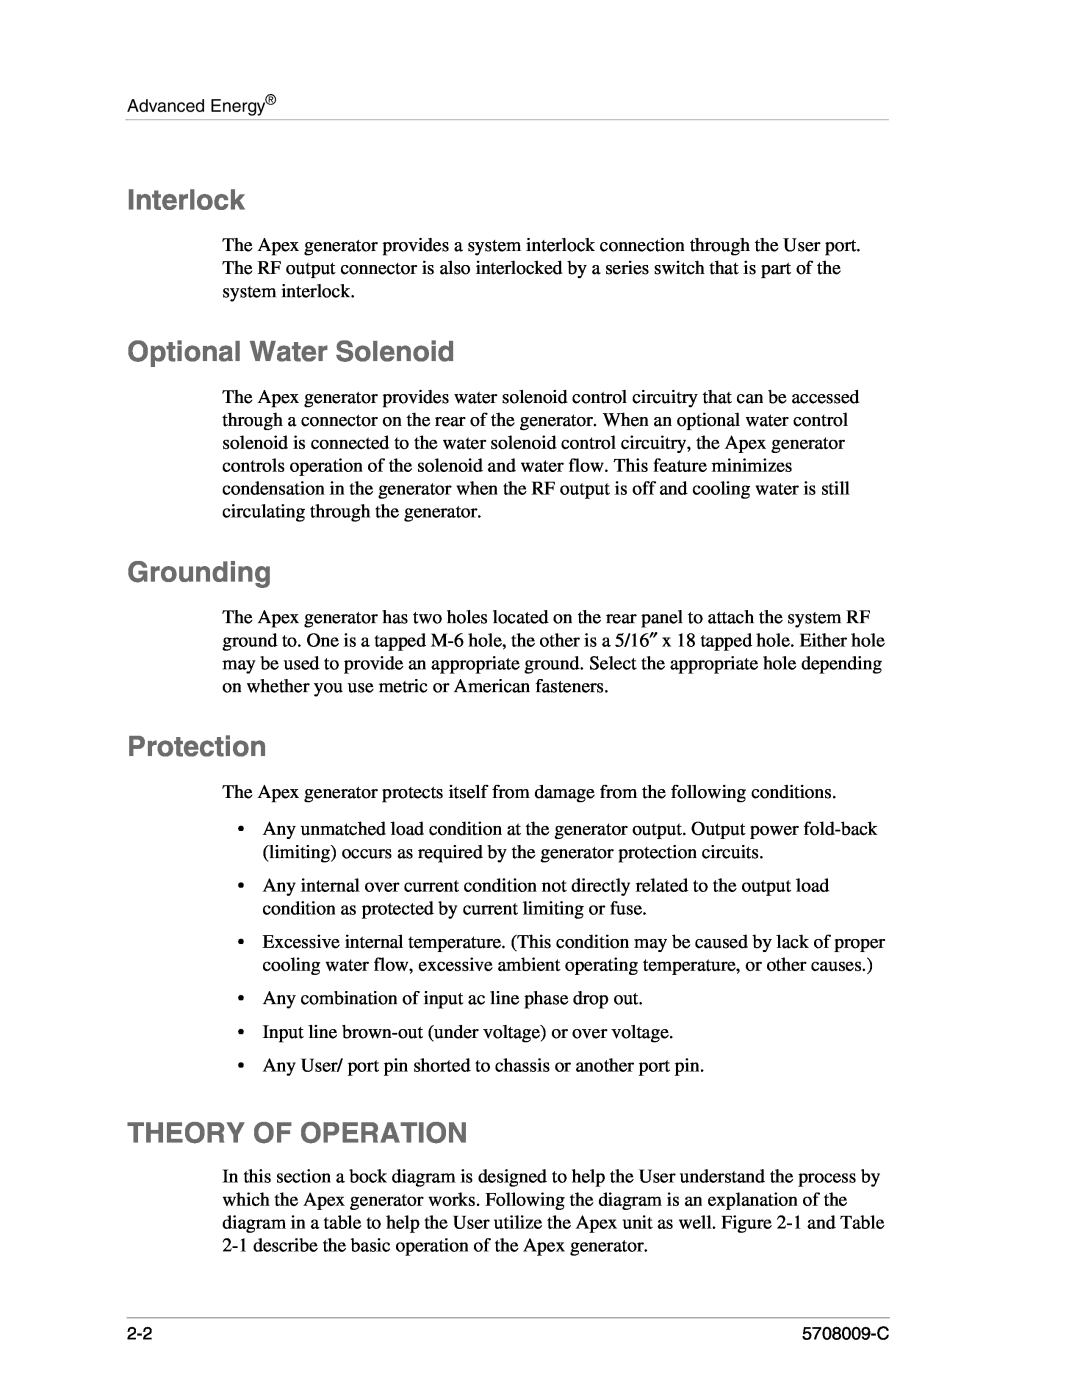 Apex Digital 5708009-C manual Interlock, Optional Water Solenoid, Grounding, Protection, Theory Of Operation 